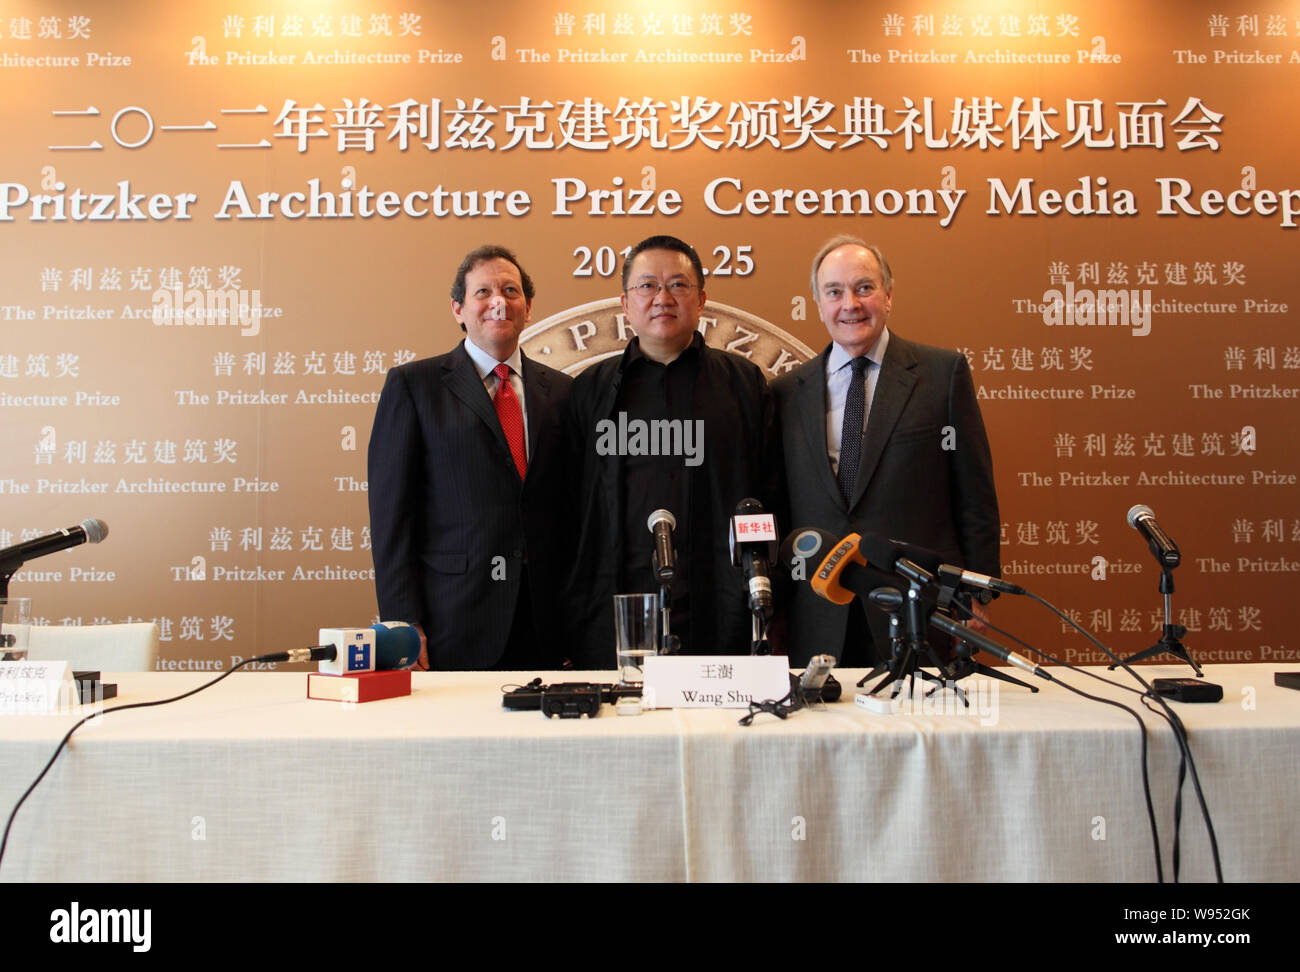 2012 Pritzker Architecture Prize winner Wang Shu (C), Palumbo (R), chairman of the jury of the Pritzker Architecture Prize, and Thomas Pritzker, Chair Stock Photo